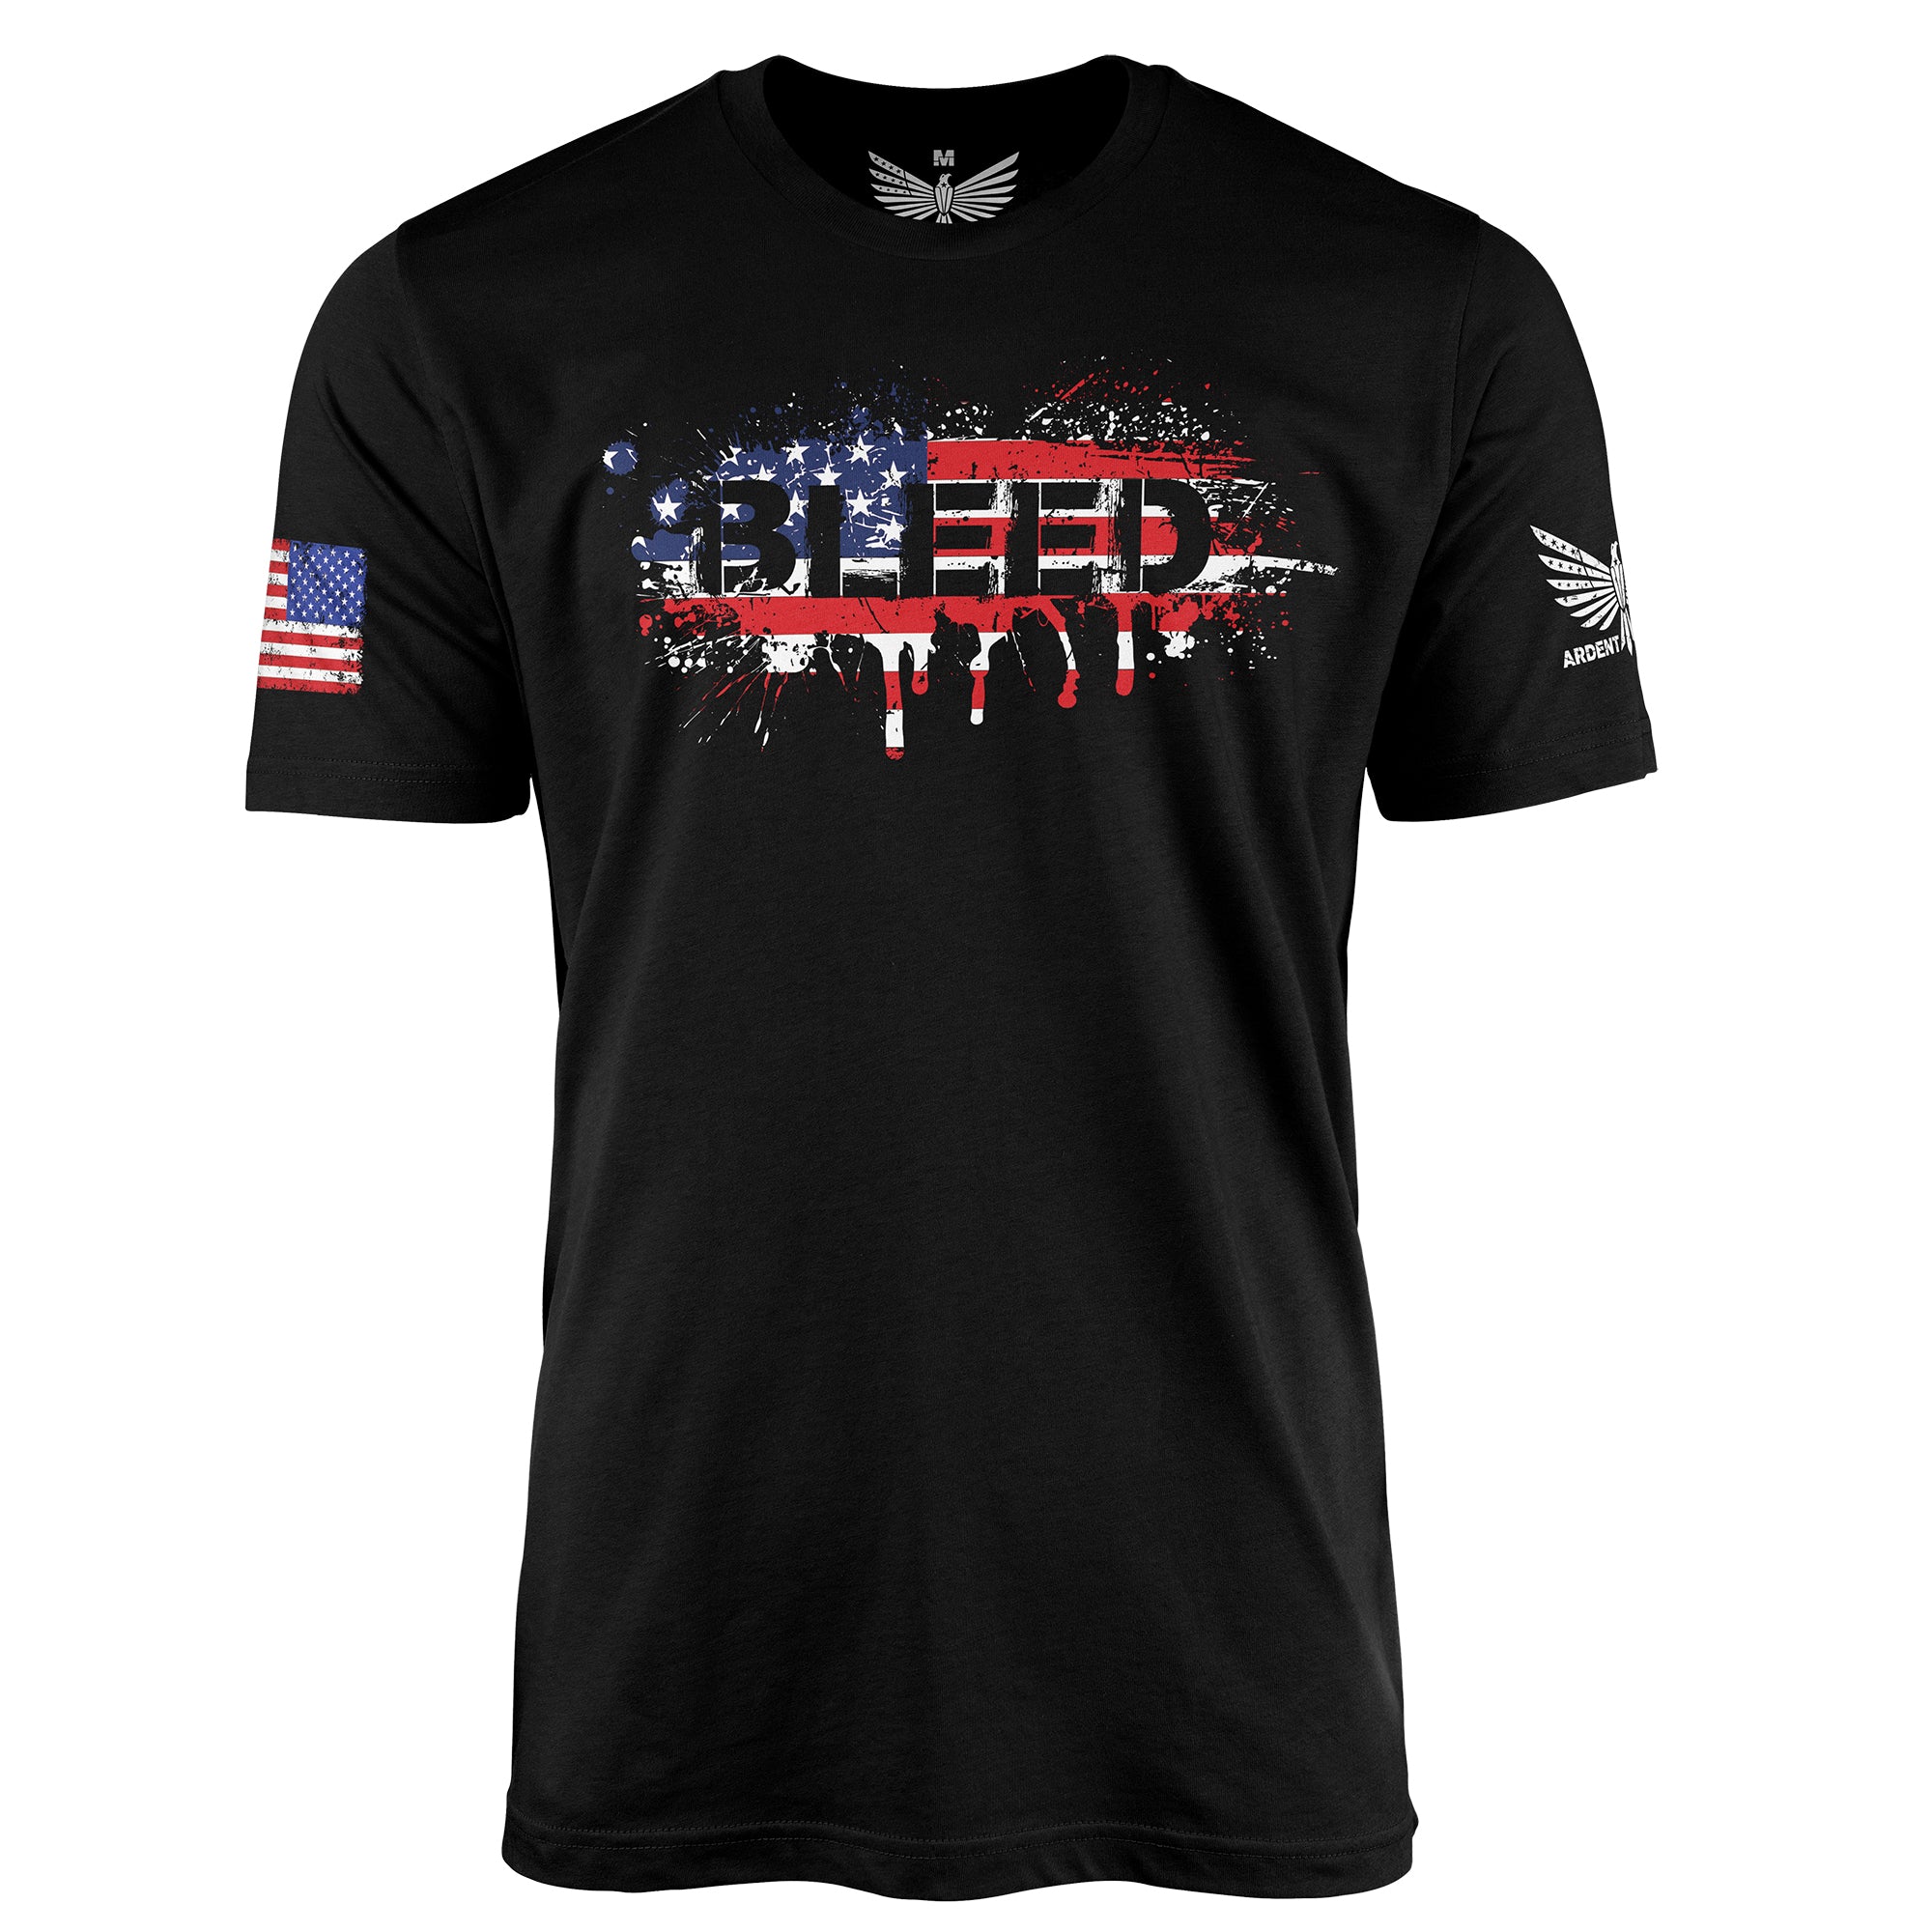 Bleed-Men's Shirt-S-Ardent Patriot Apparel Co.